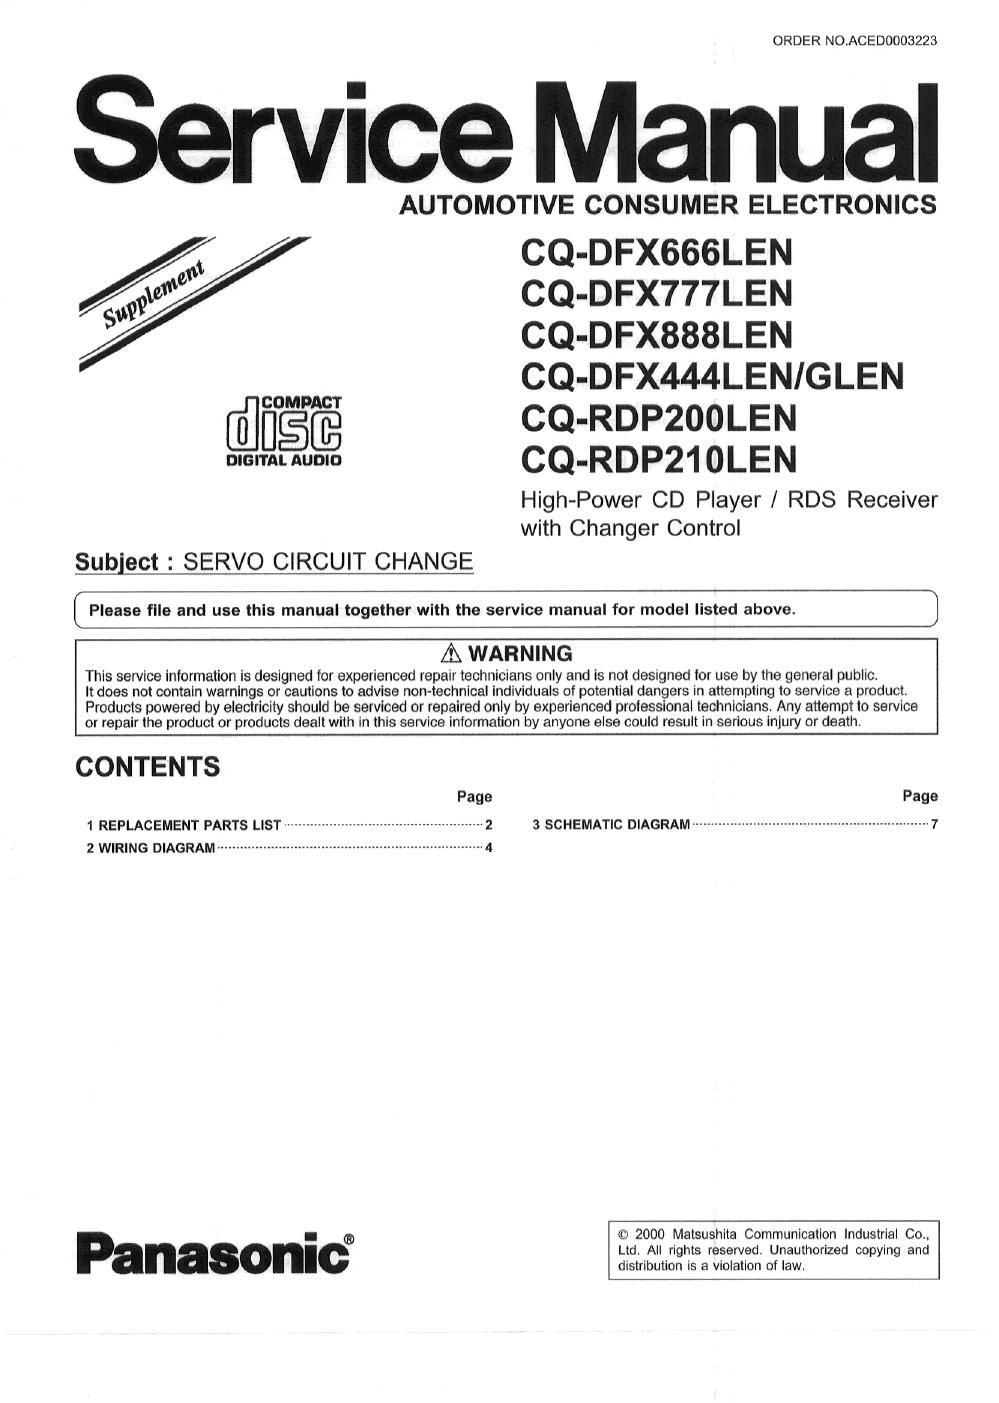 panasonic cq dfx 444 glen service manual